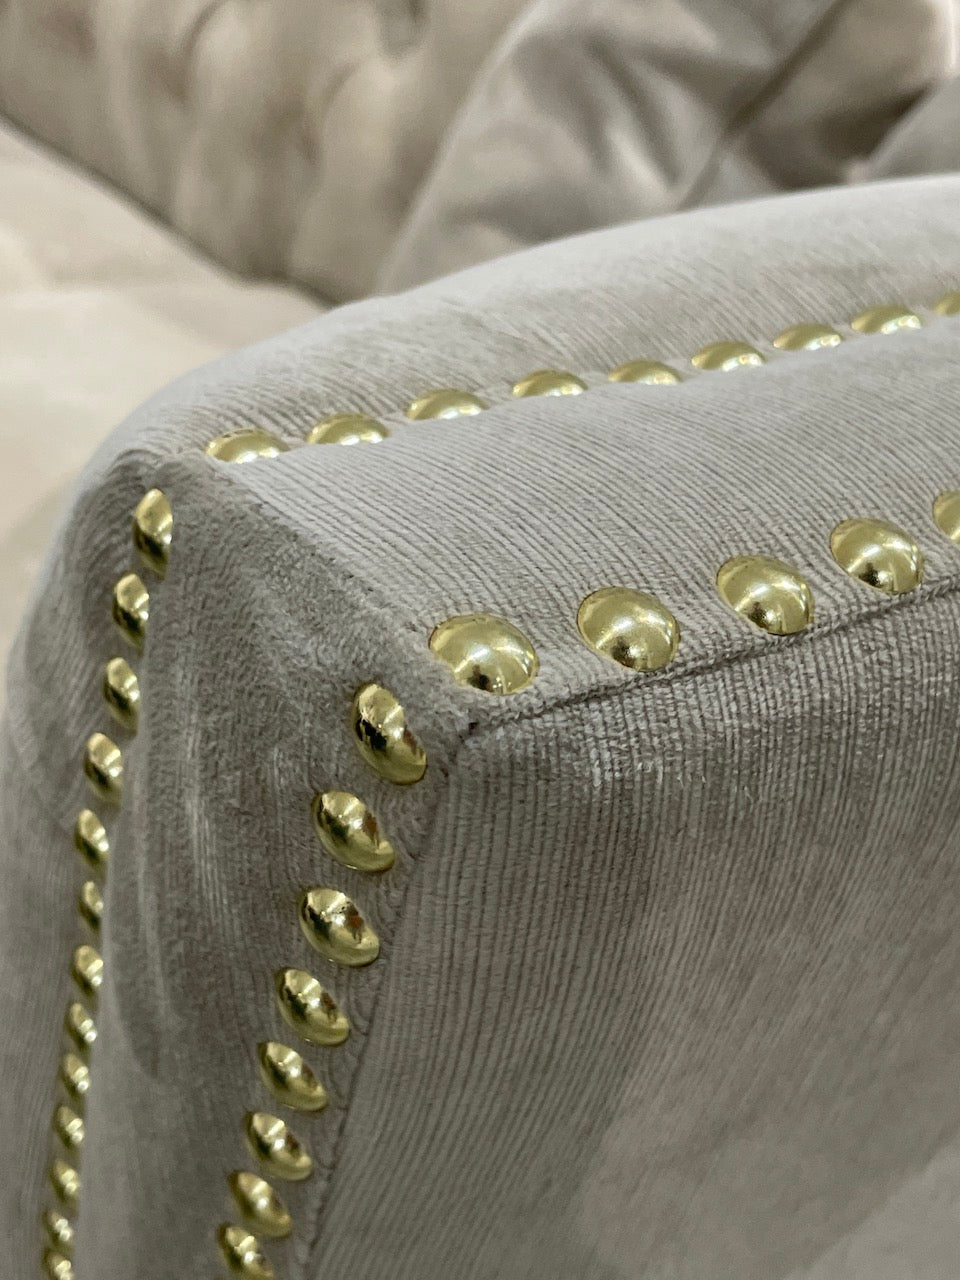 Balboa 3 Seater Sofa Creme Velvet - Future Classics Furniture